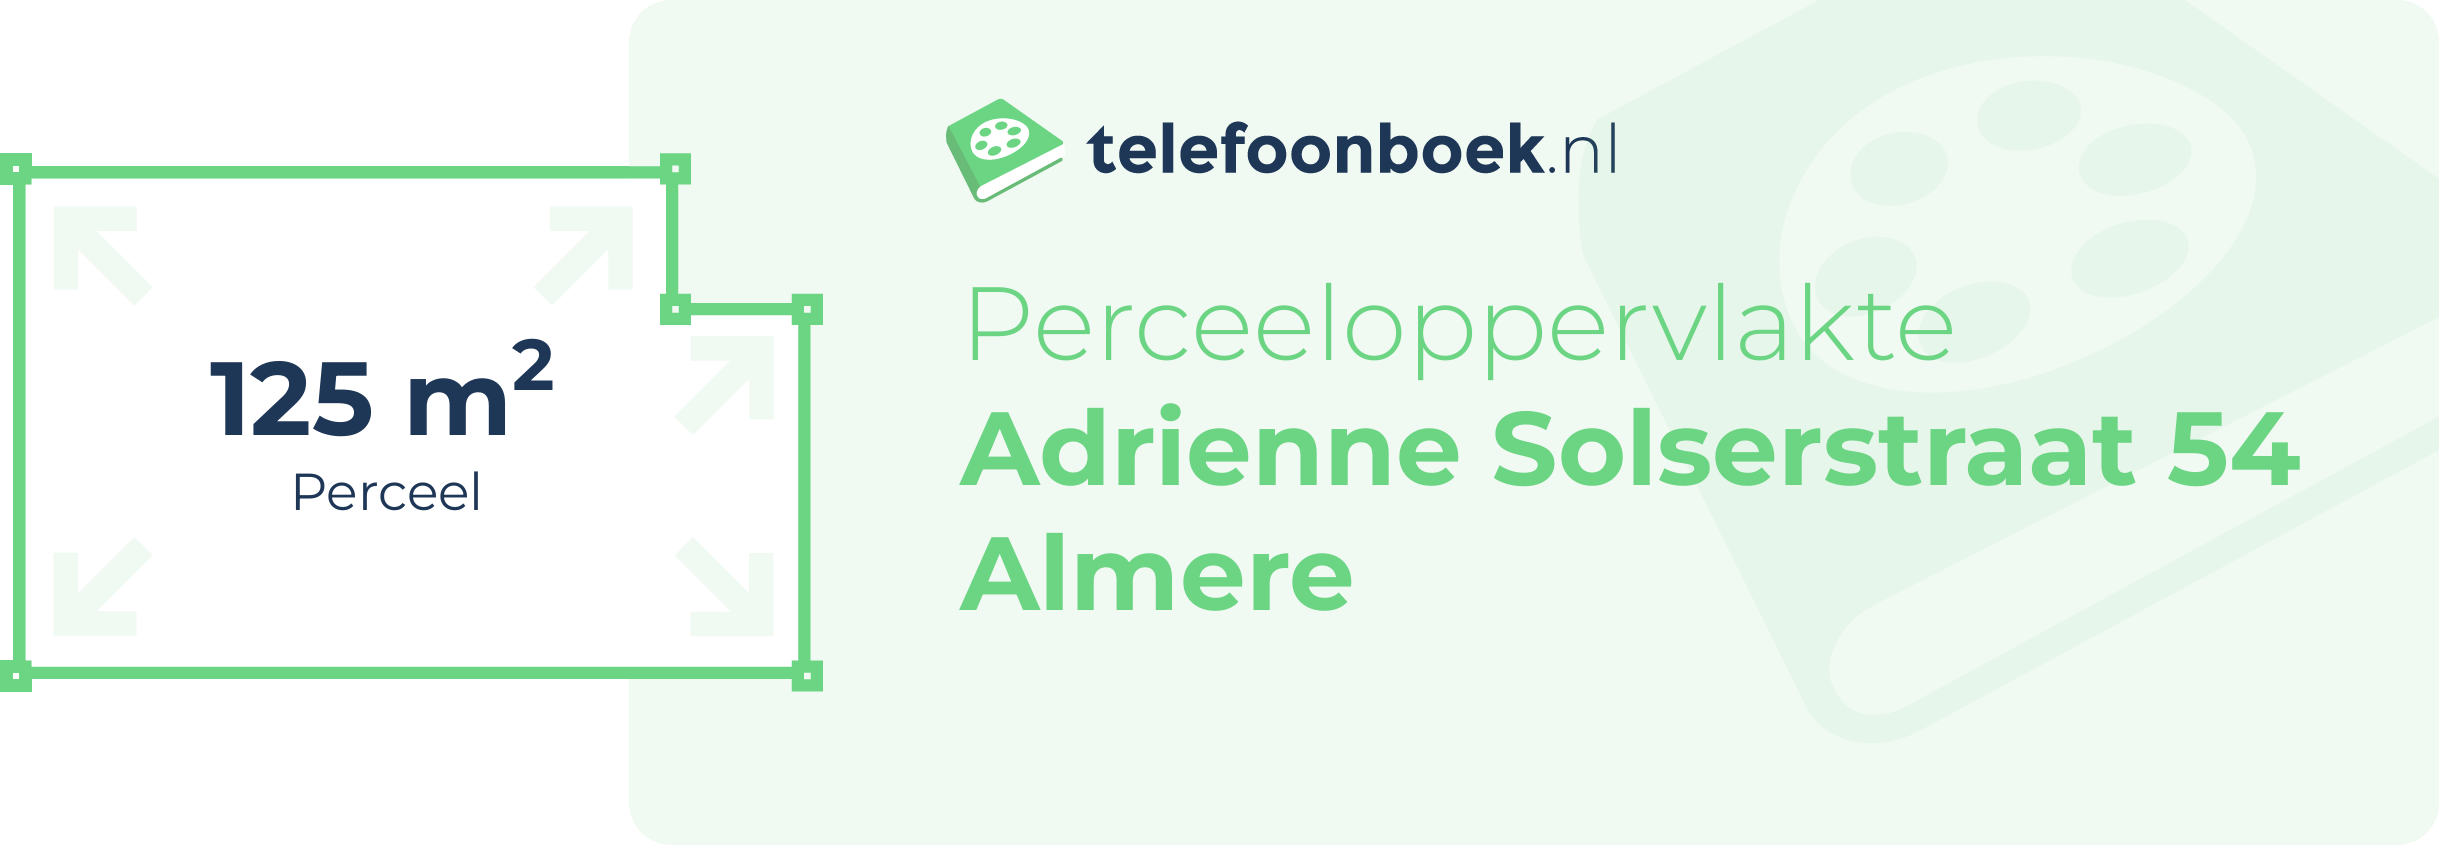 Perceeloppervlakte Adrienne Solserstraat 54 Almere